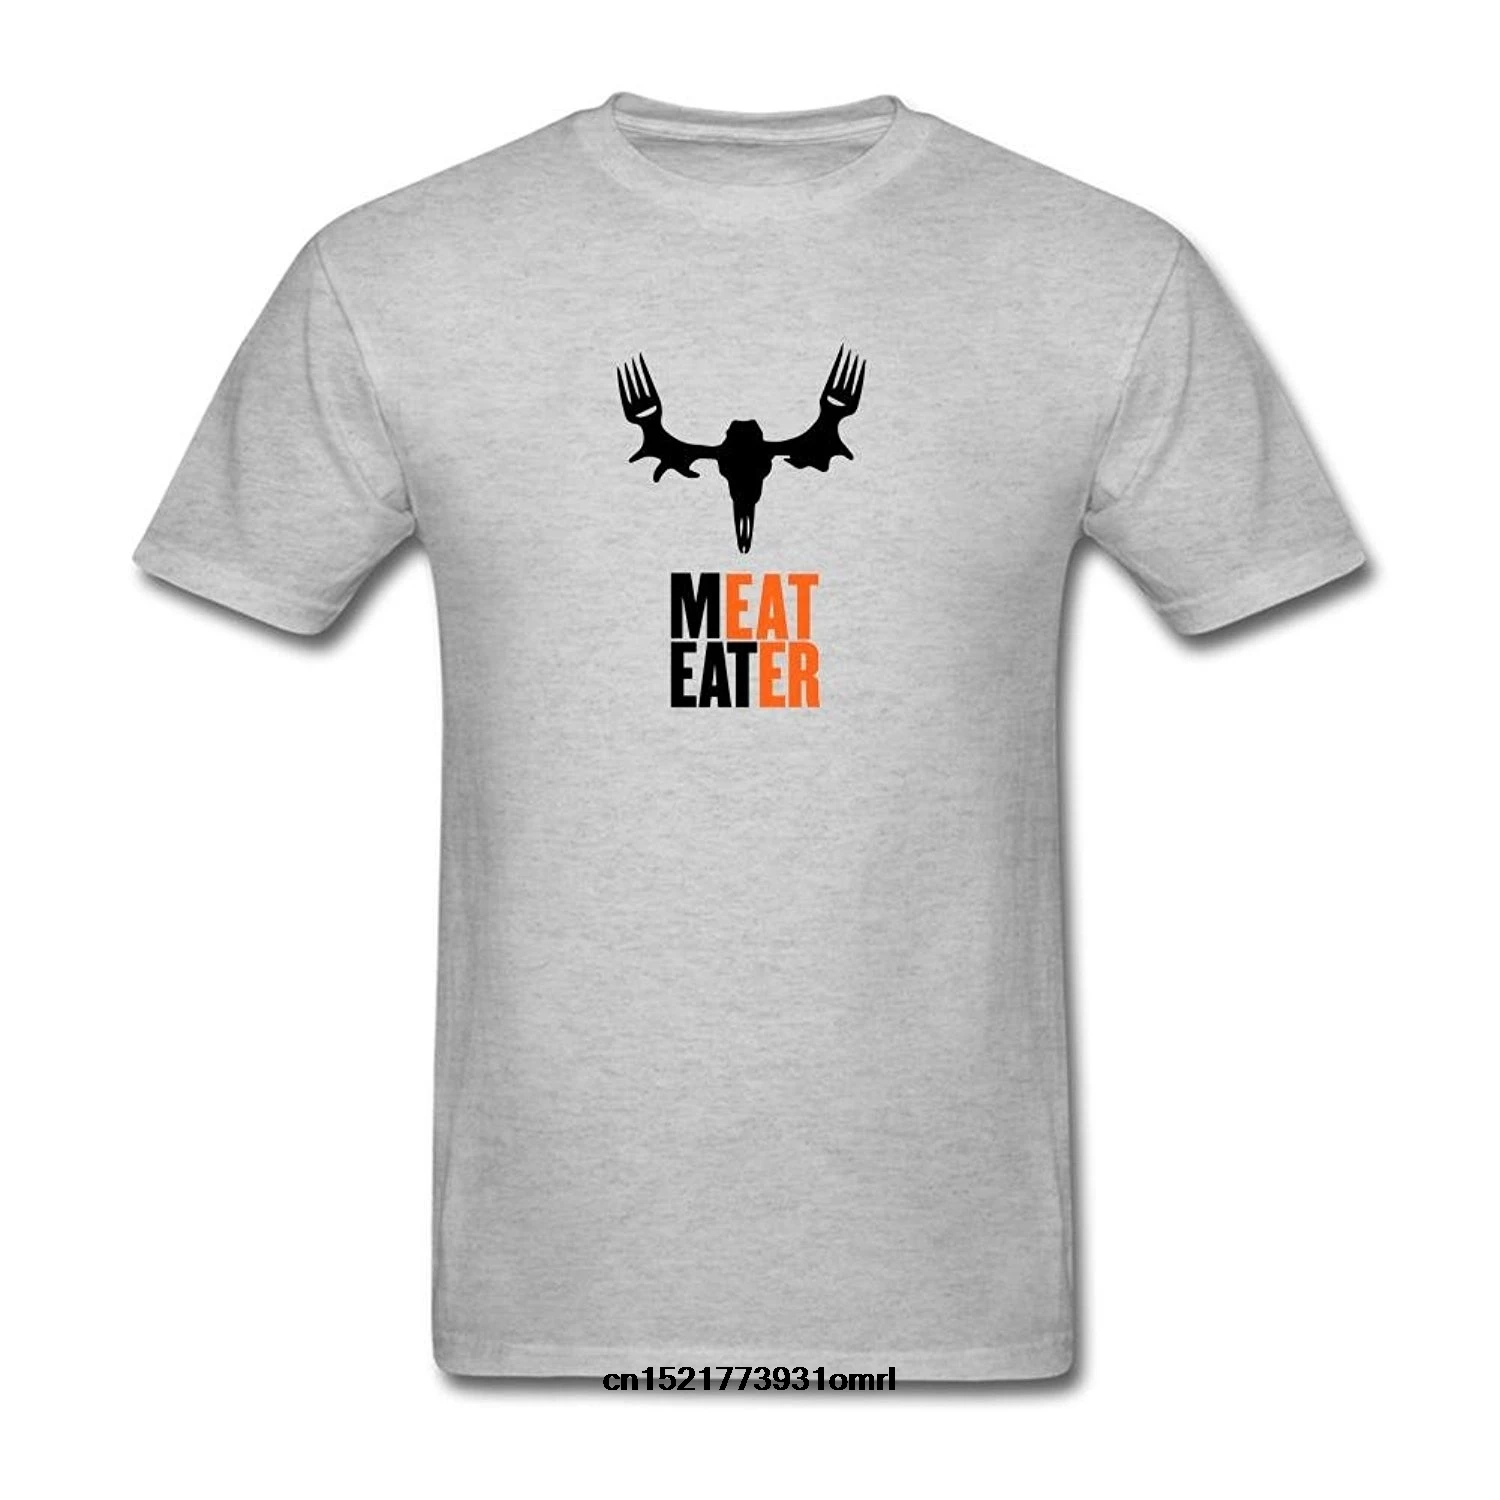 US $6.77 |Men T shirt Toppro Meat Eater Logo S ColorName Short Sleeve funny...